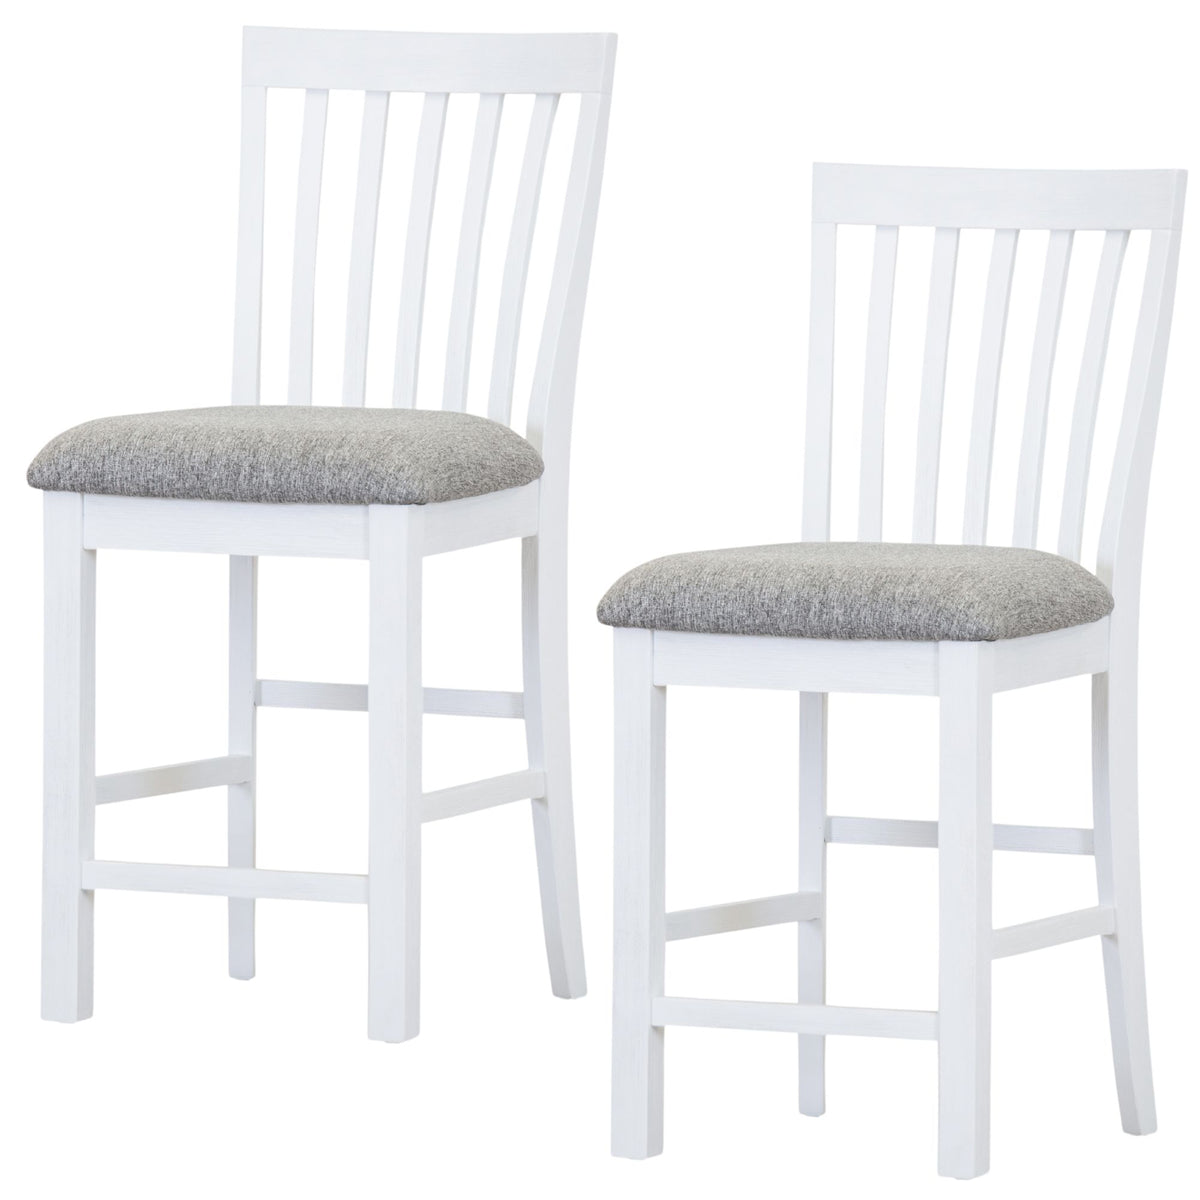 Laelia Wood Chair in Solid Acacia Coastal White - Set of 2